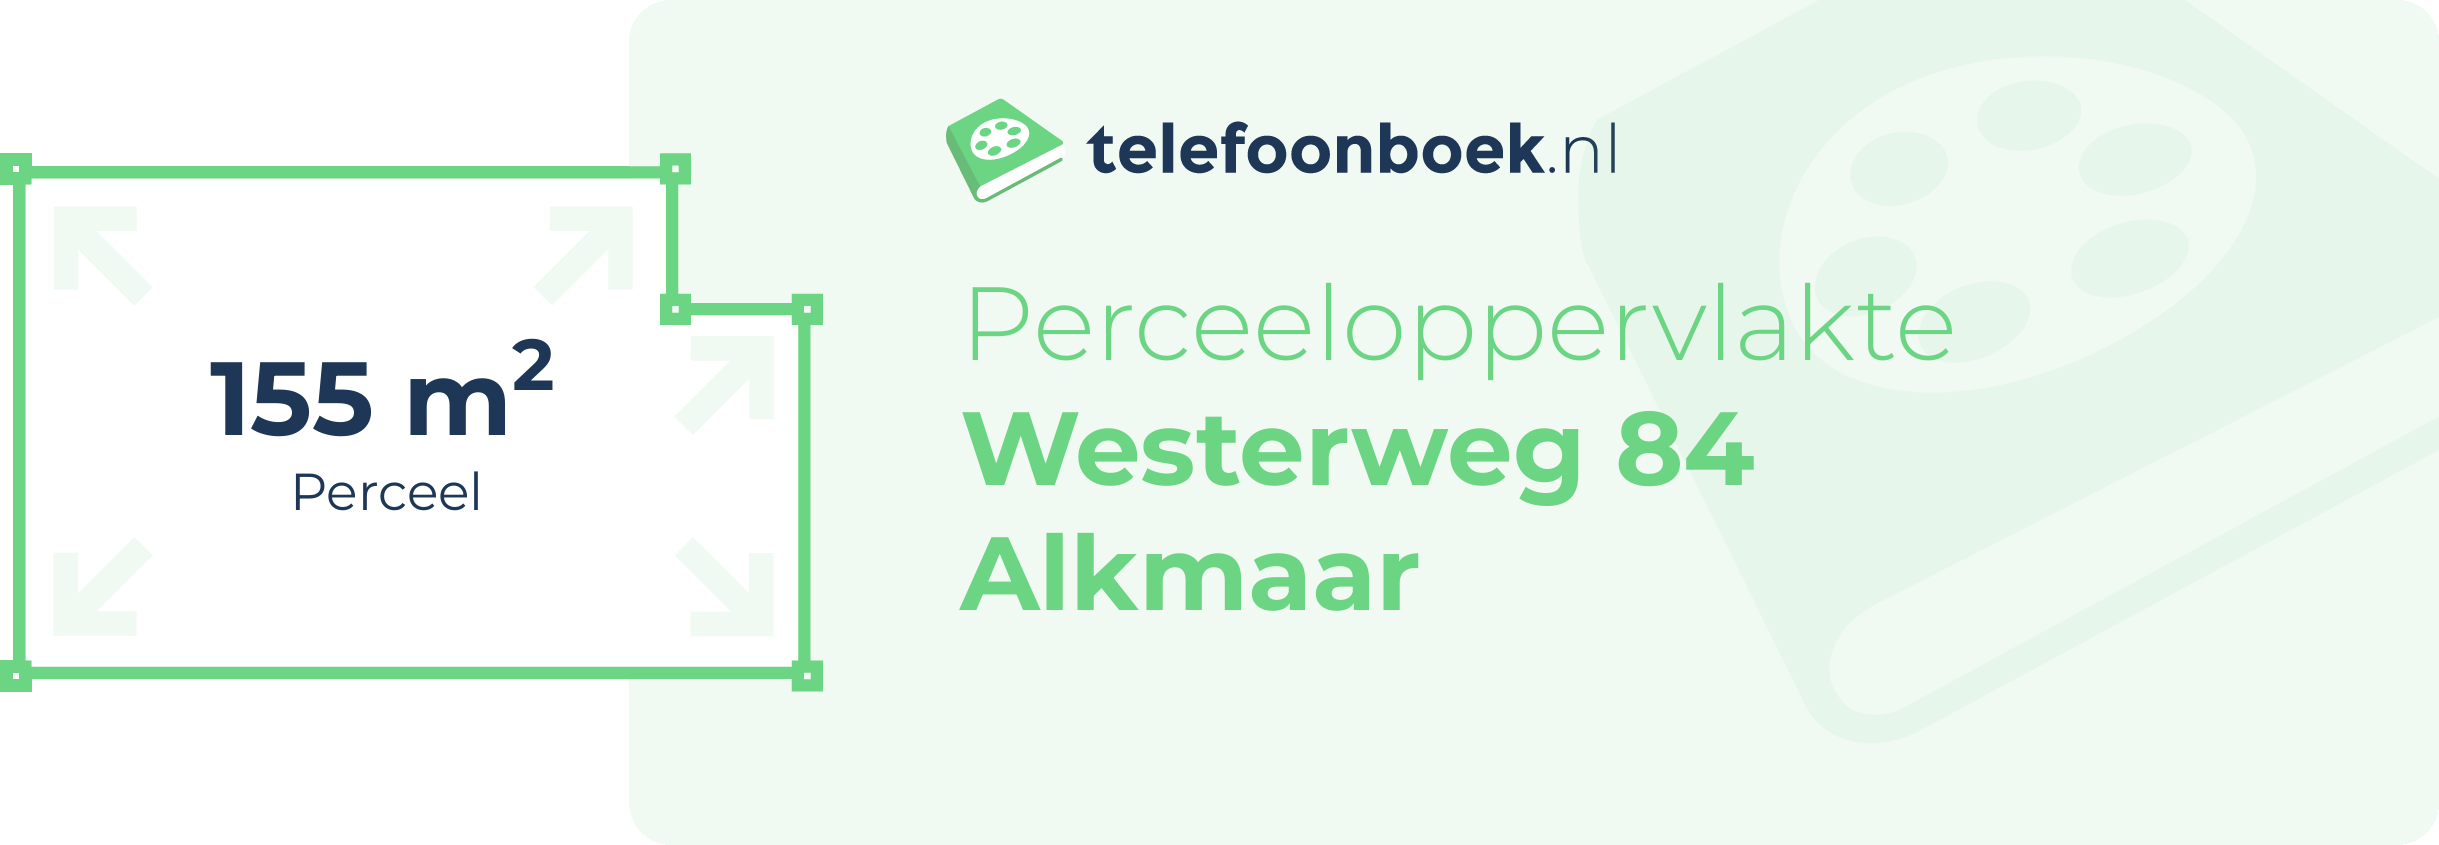 Perceeloppervlakte Westerweg 84 Alkmaar